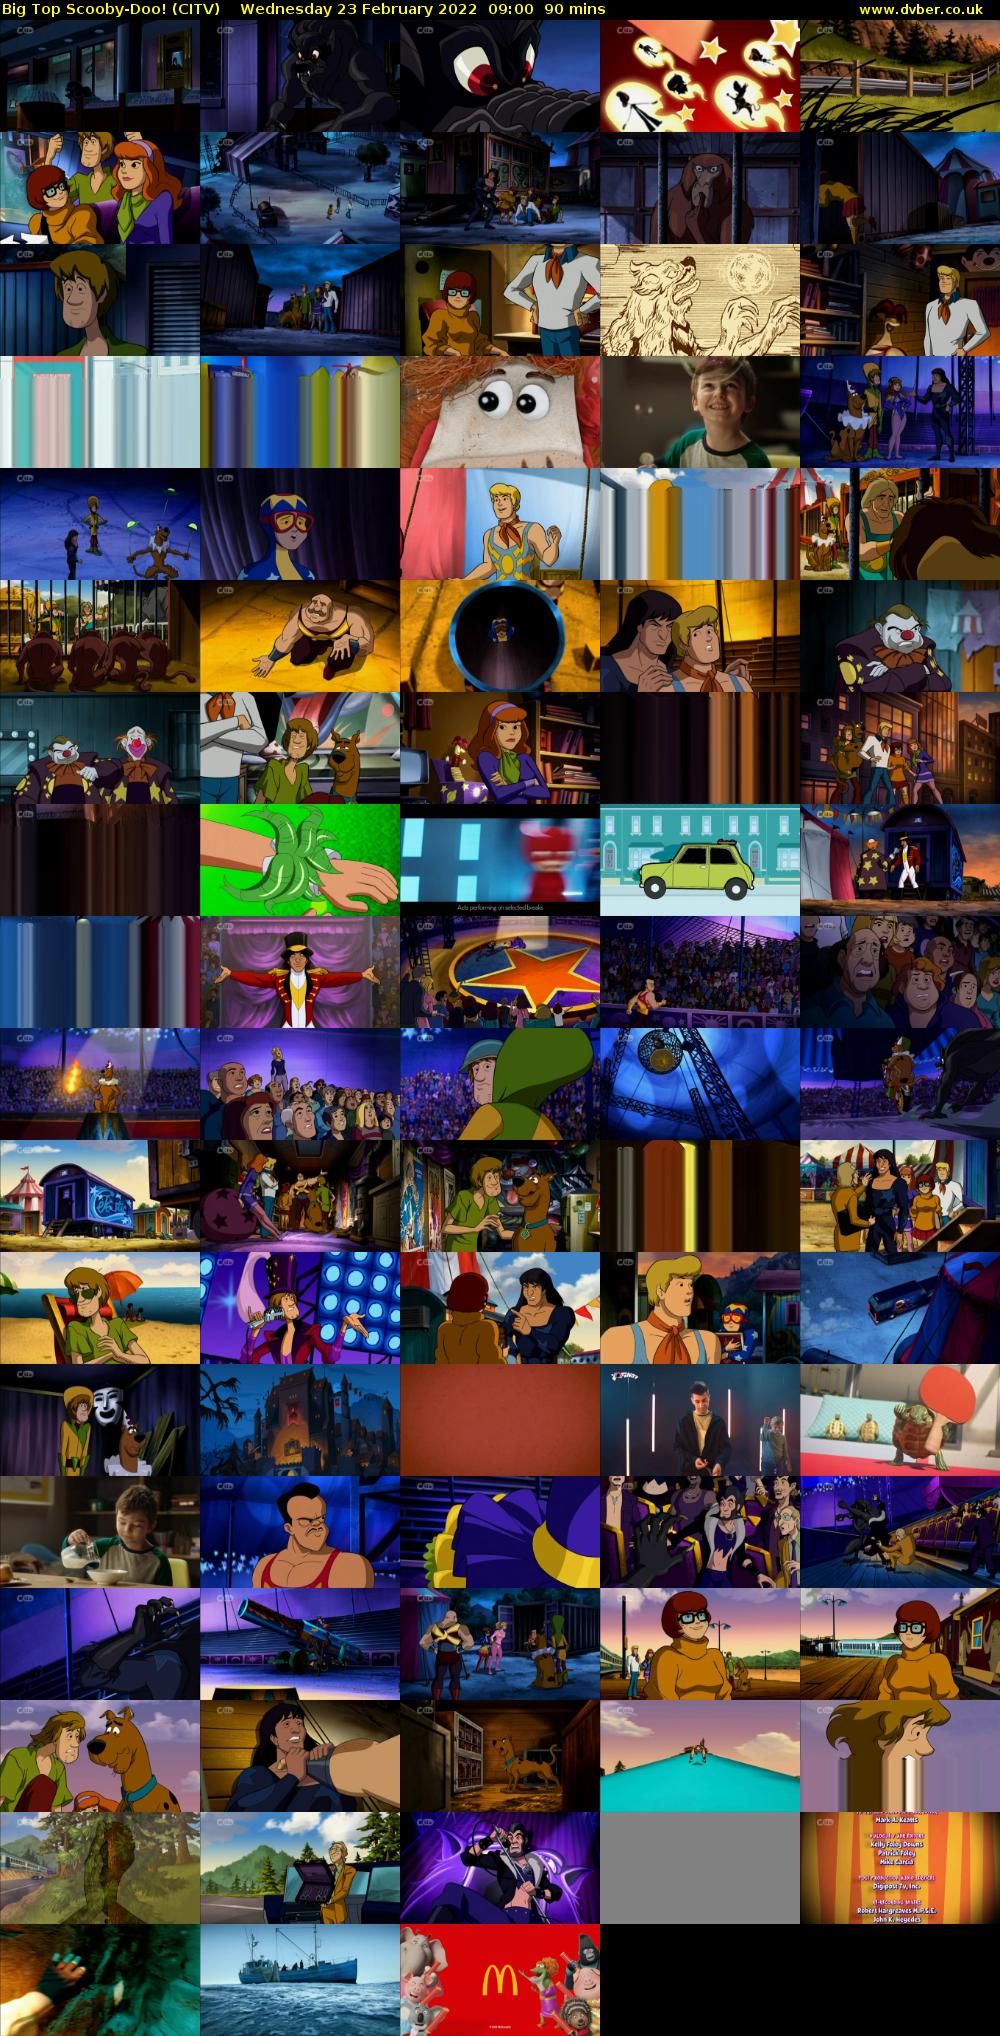 Big Top Scooby-Doo! (CITV) Wednesday 23 February 2022 09:00 - 10:30